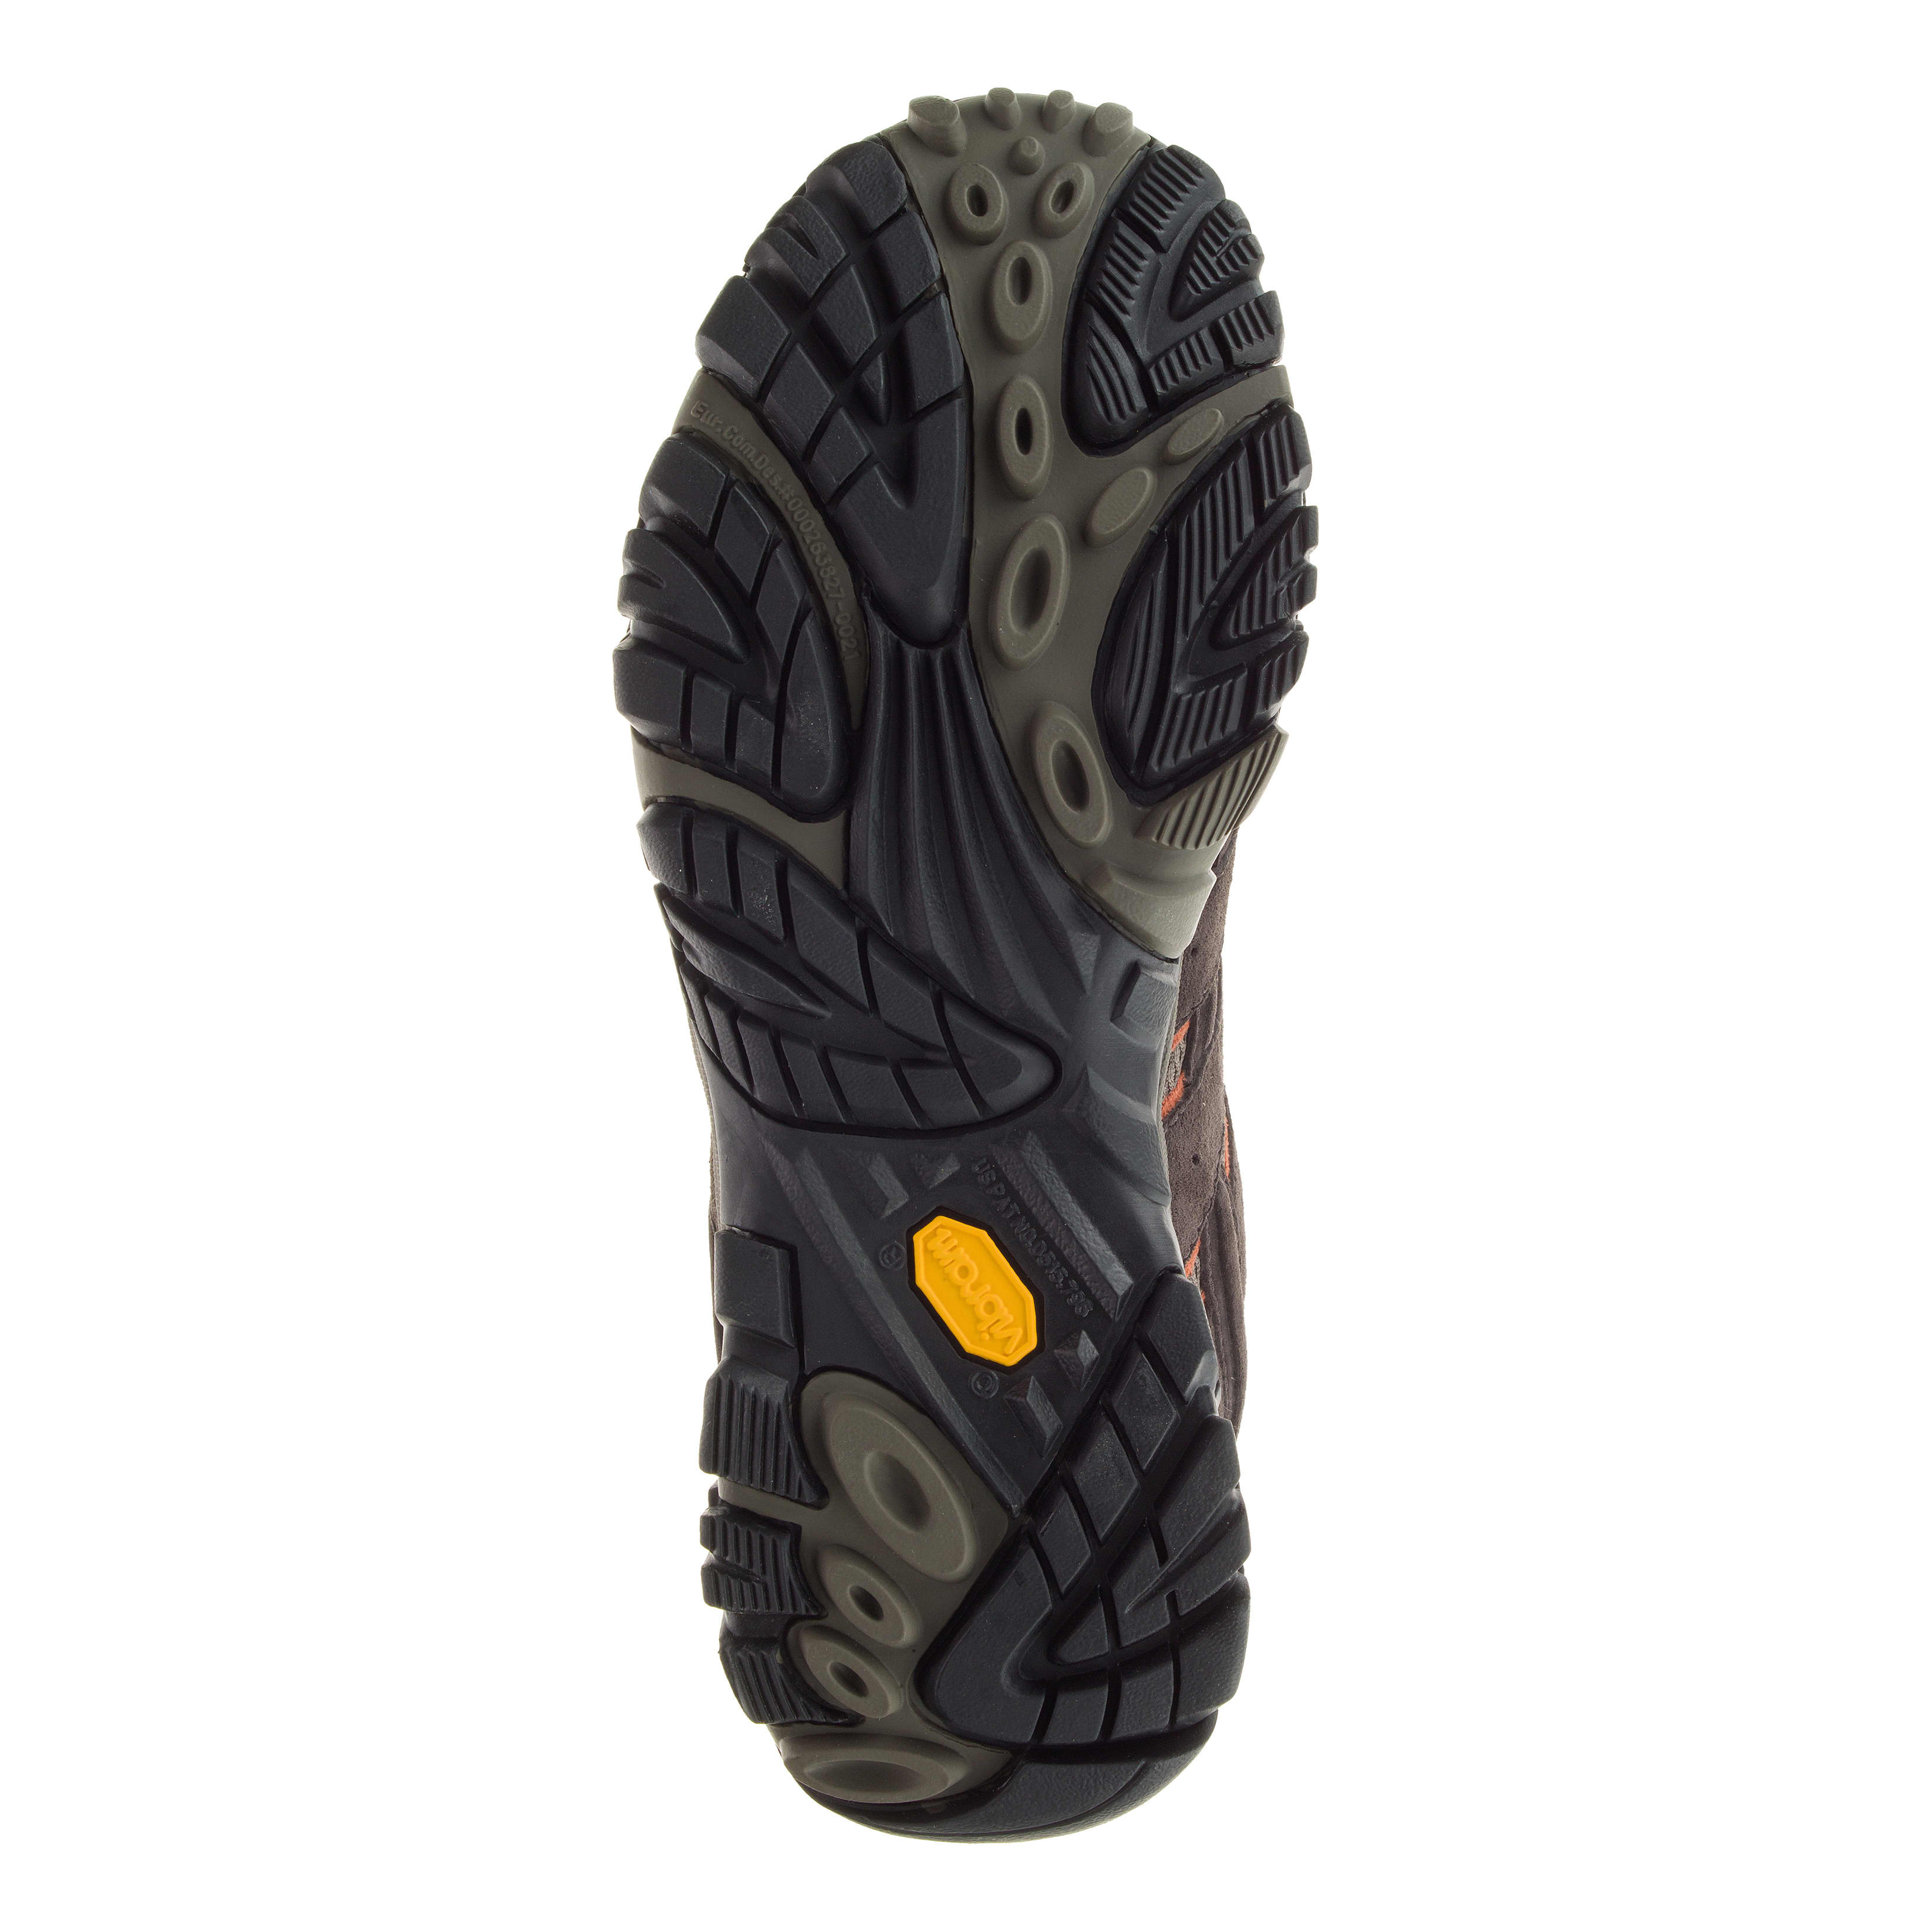 Merrell® Men’s Moab 2 Waterproof Hiking Shoes - sole